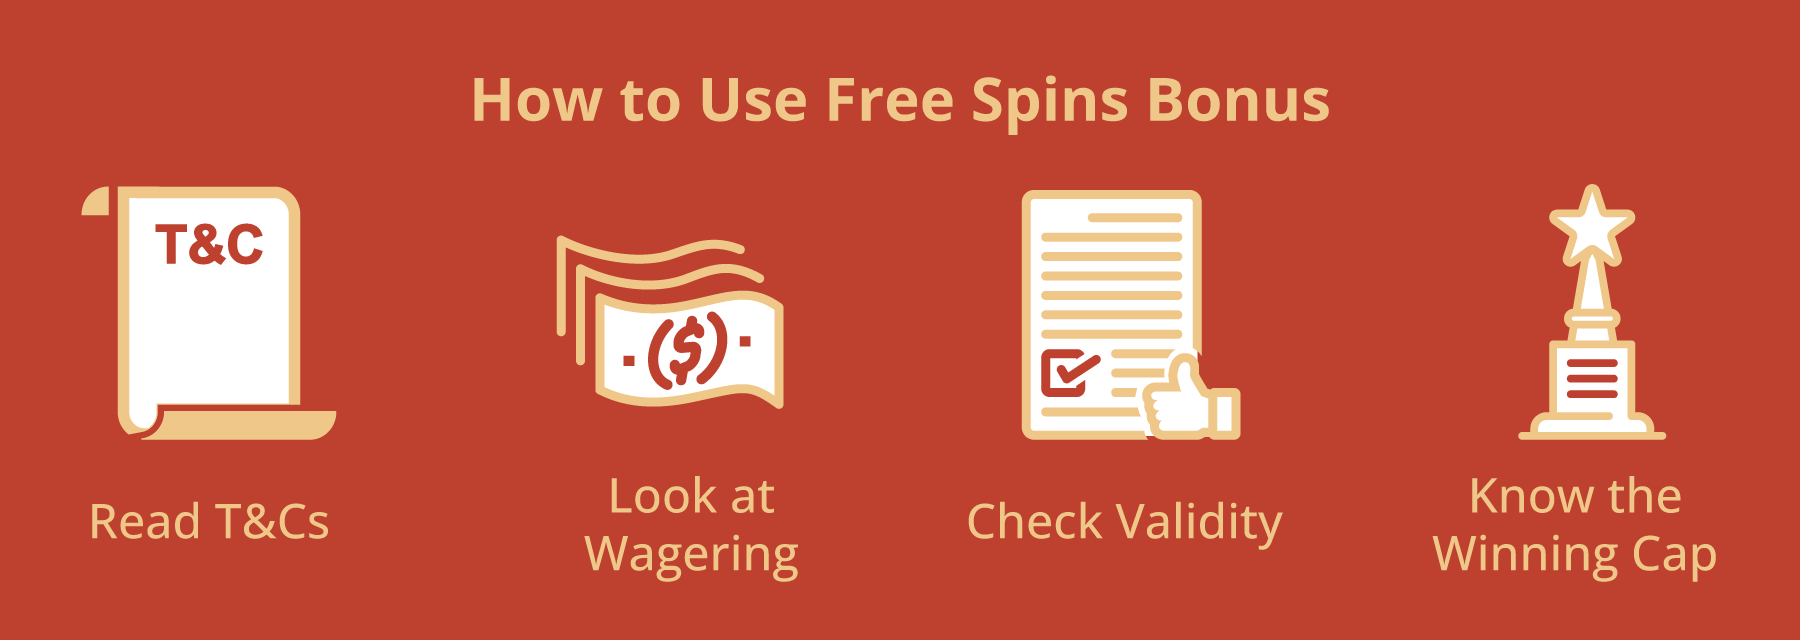 how to use free spins bonus